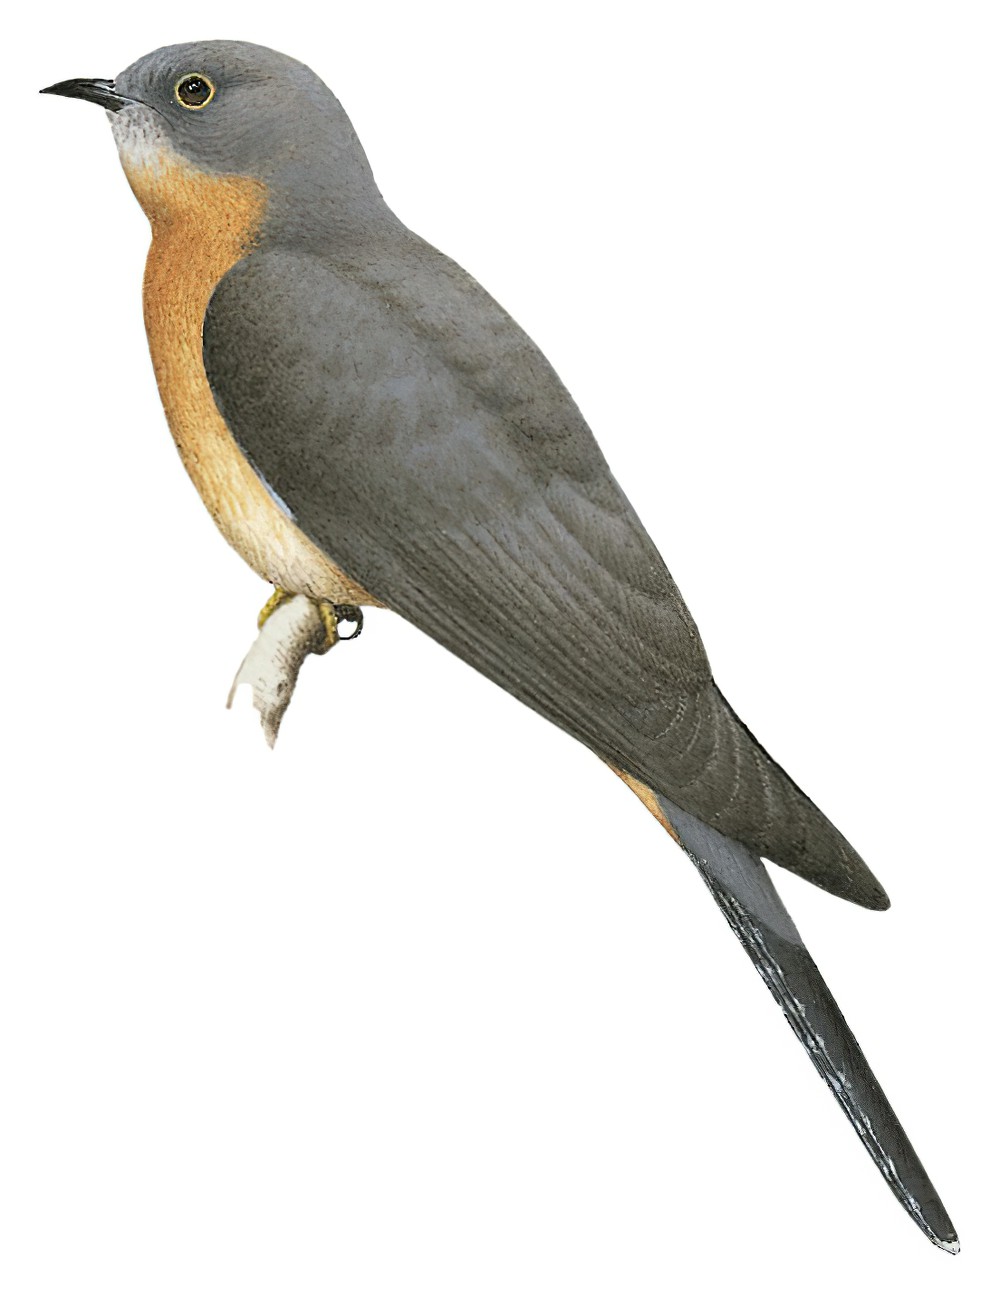 Fan-tailed Cuckoo / Cacomantis flabelliformis